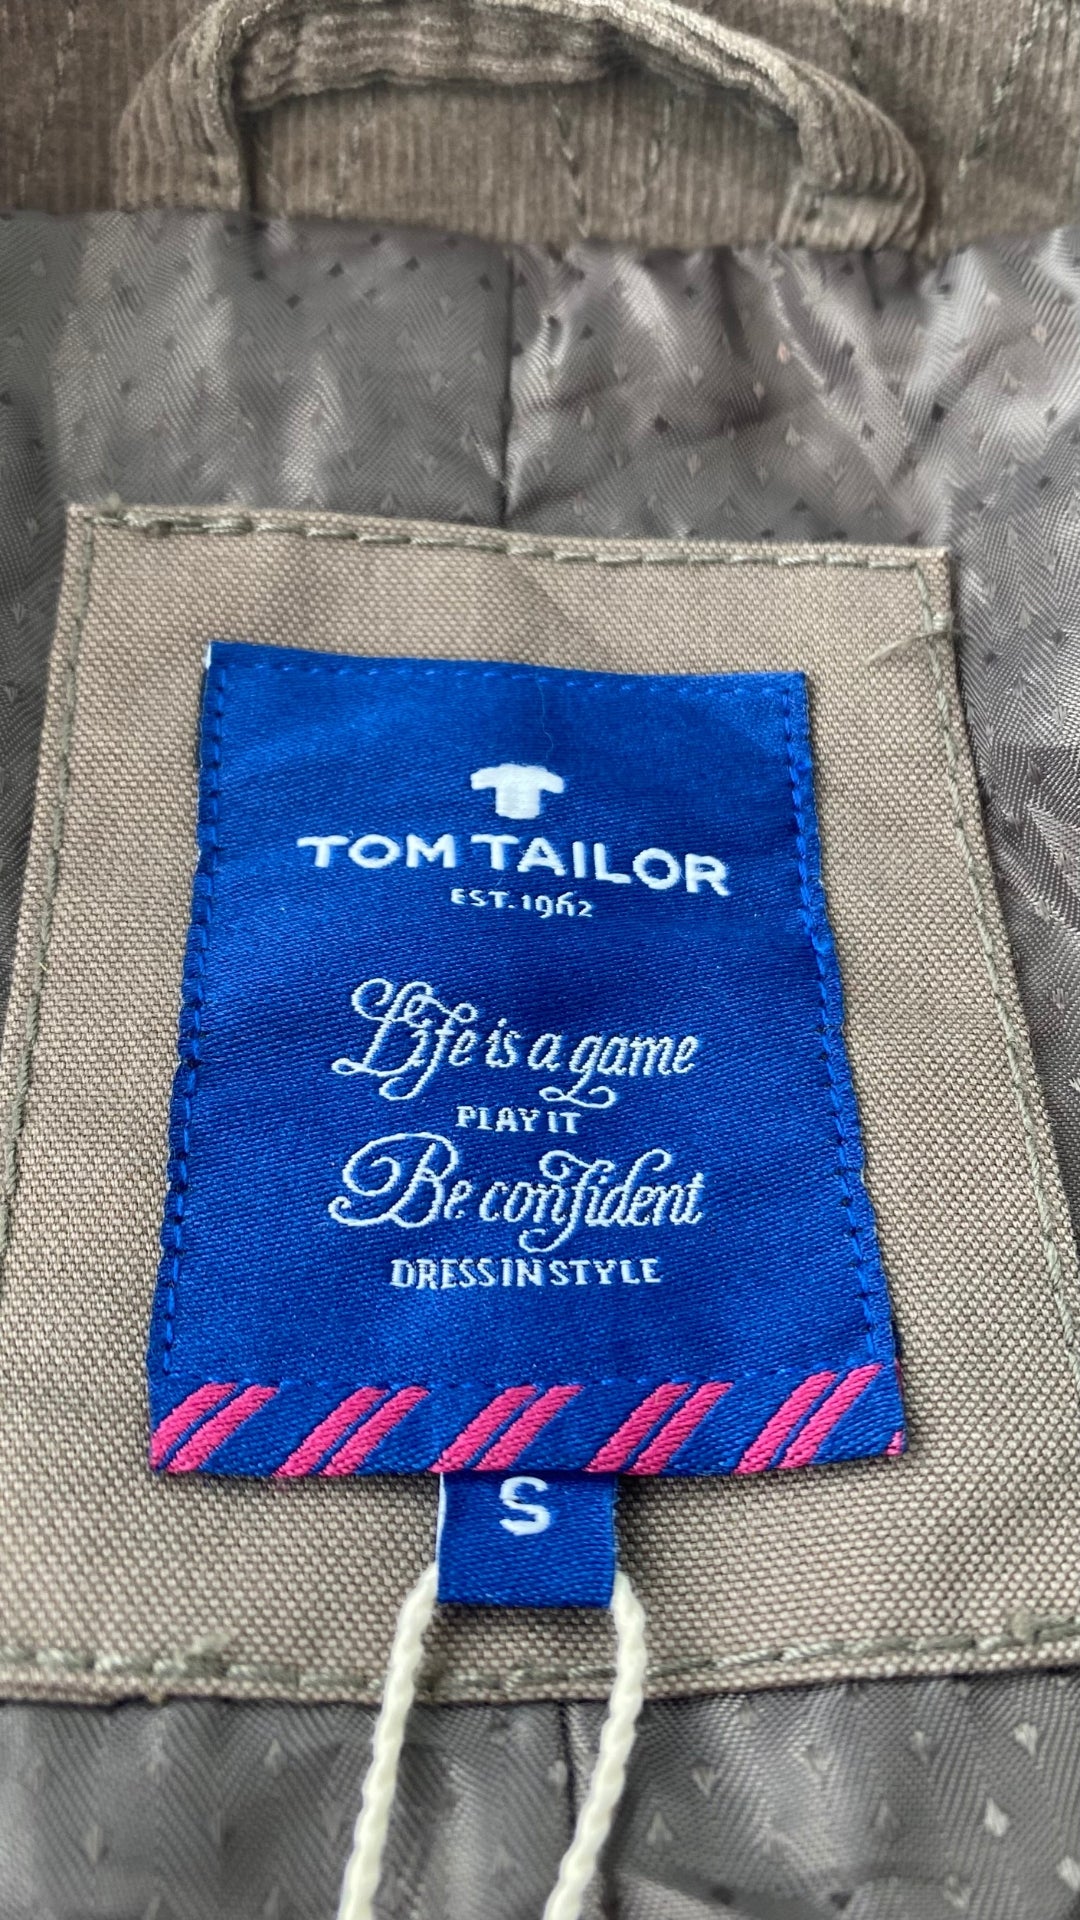 Trench neuf taupe Tom Tailor taille small. Vue de l'étiquette de marque.